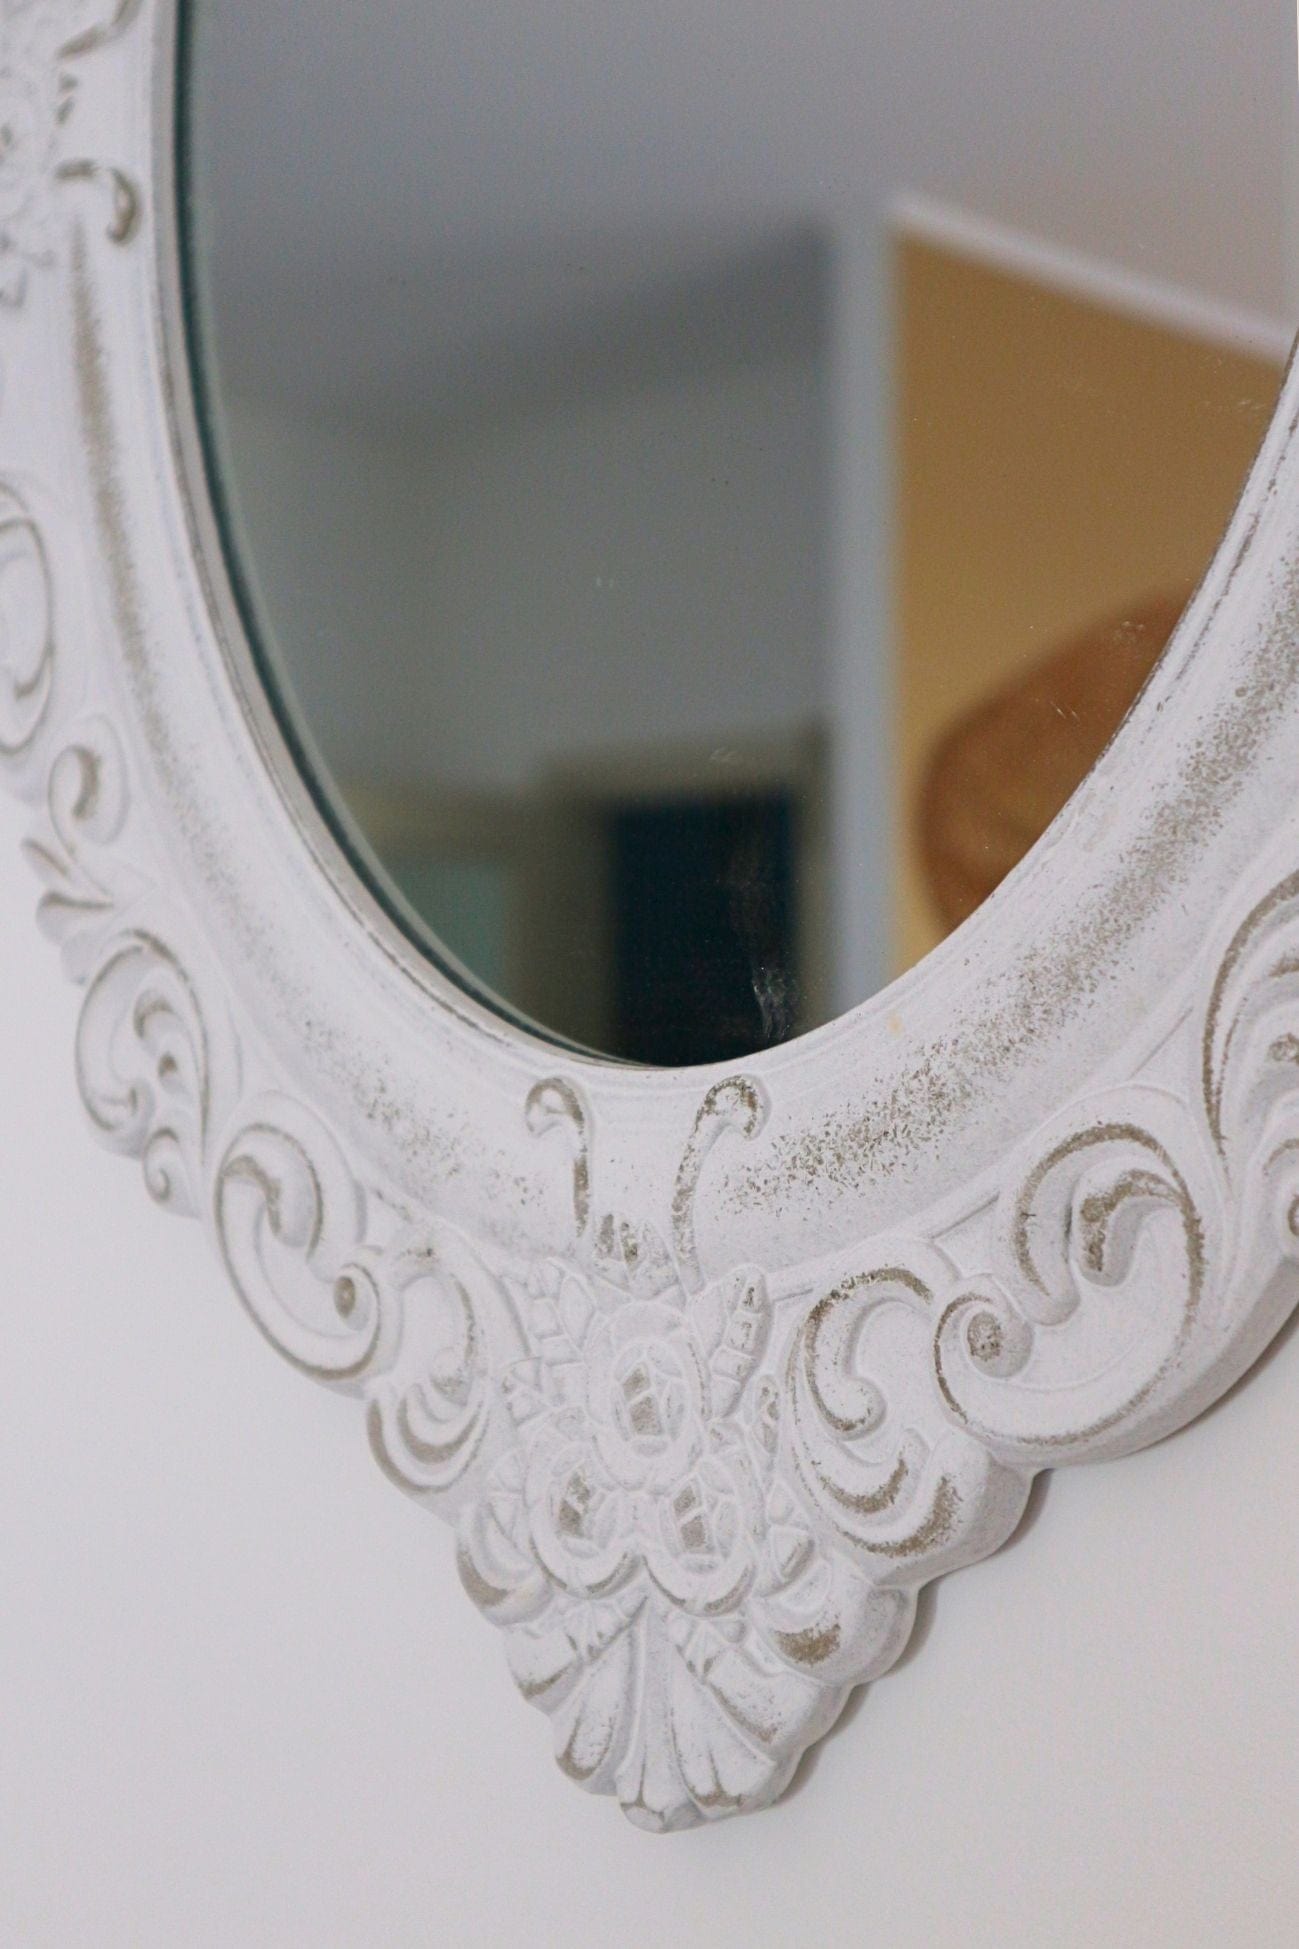 Item International Providence Providence - Specchio shabby chic in legno finto rovinato | Item International